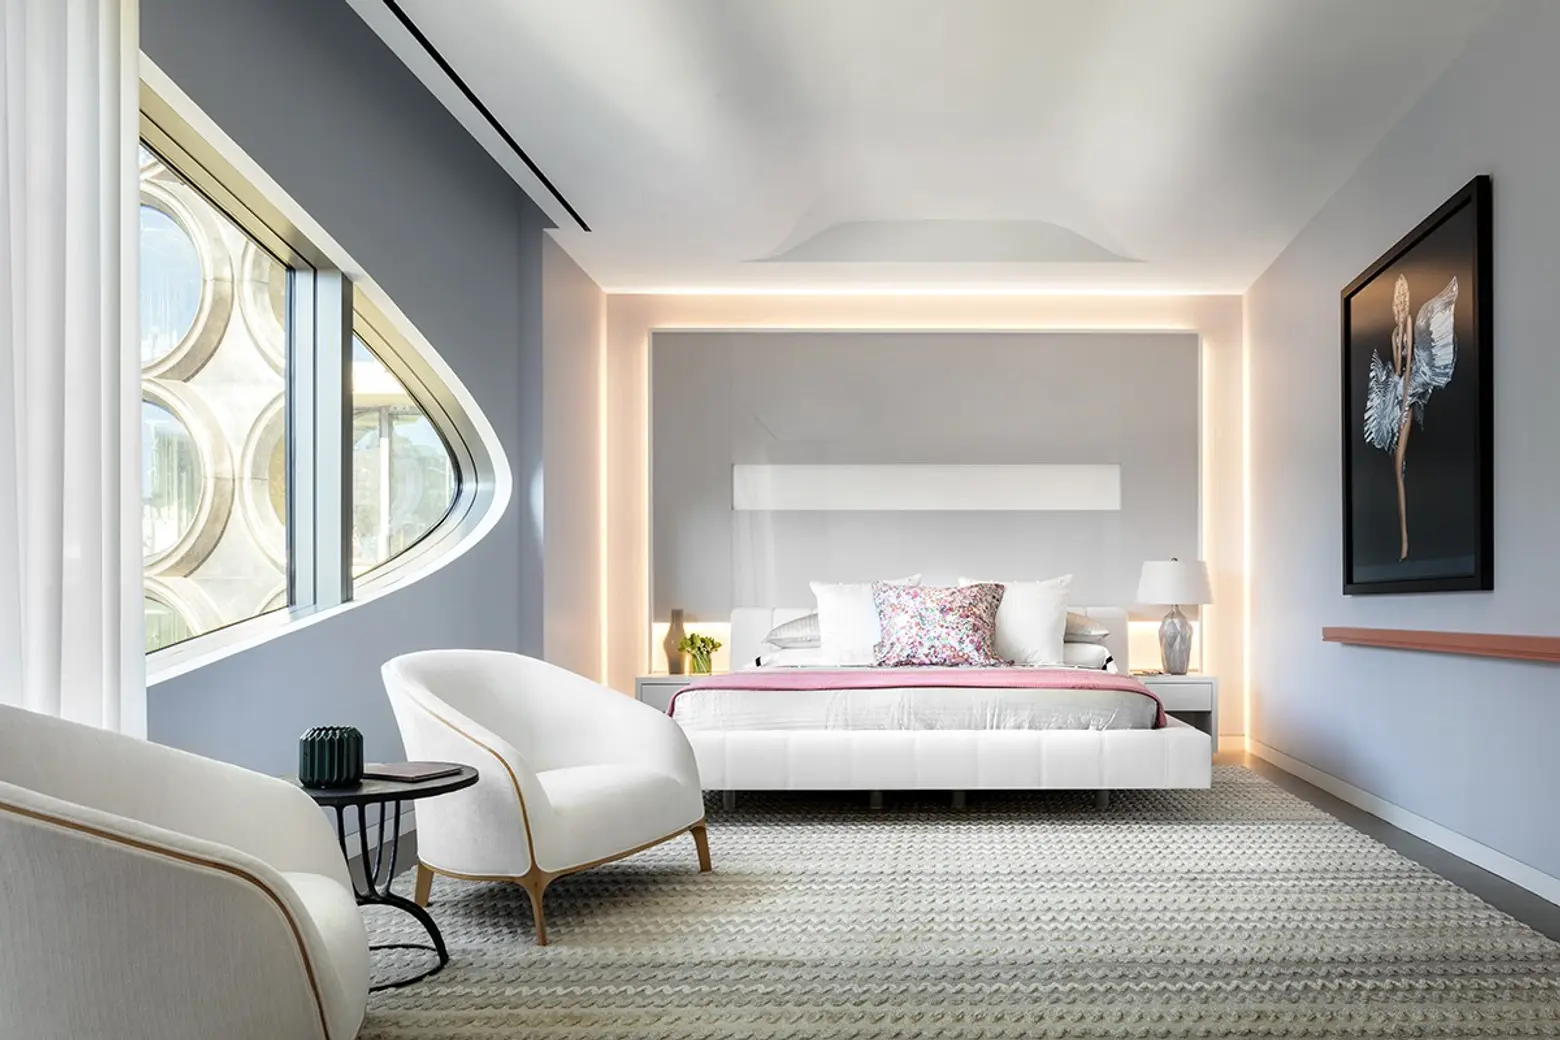 REVEALED: Inside the model residences of Zaha Hadid’s 520 West 28th Street